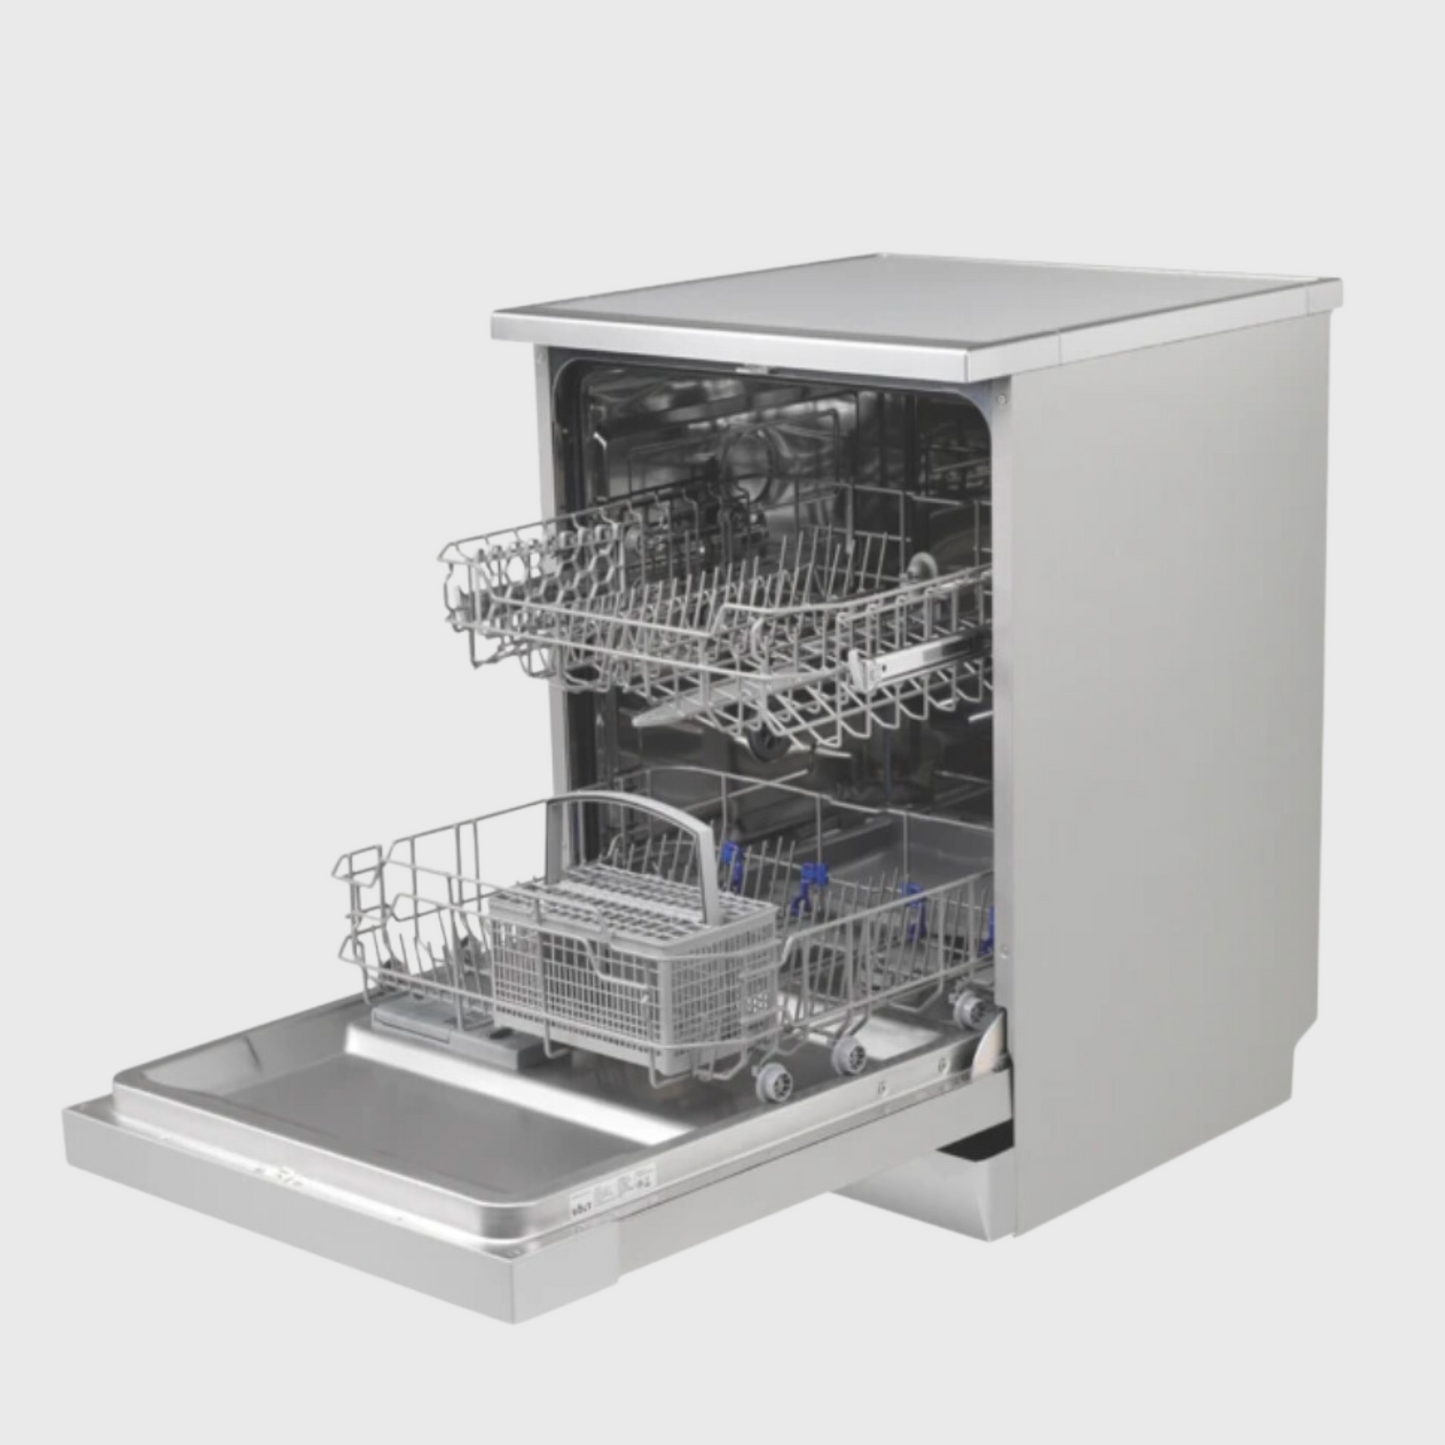 Solt 60cm Freestanding Dishwasher GGSDW6012S